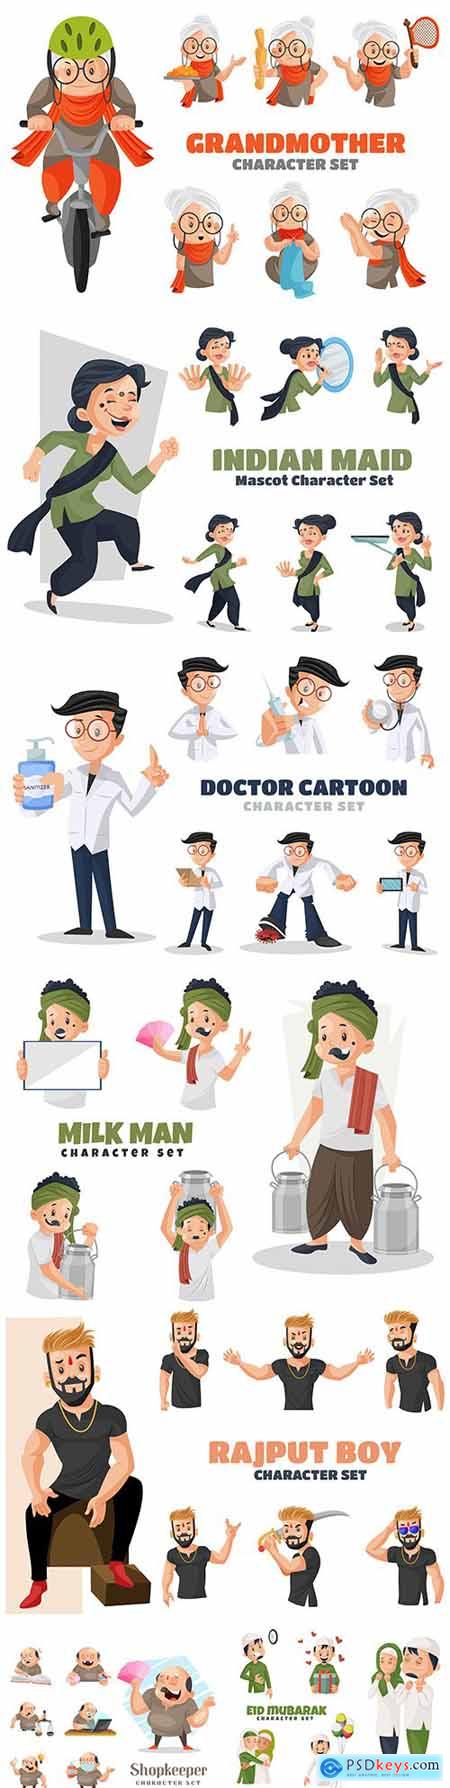 People of different professions illustration cartoons set